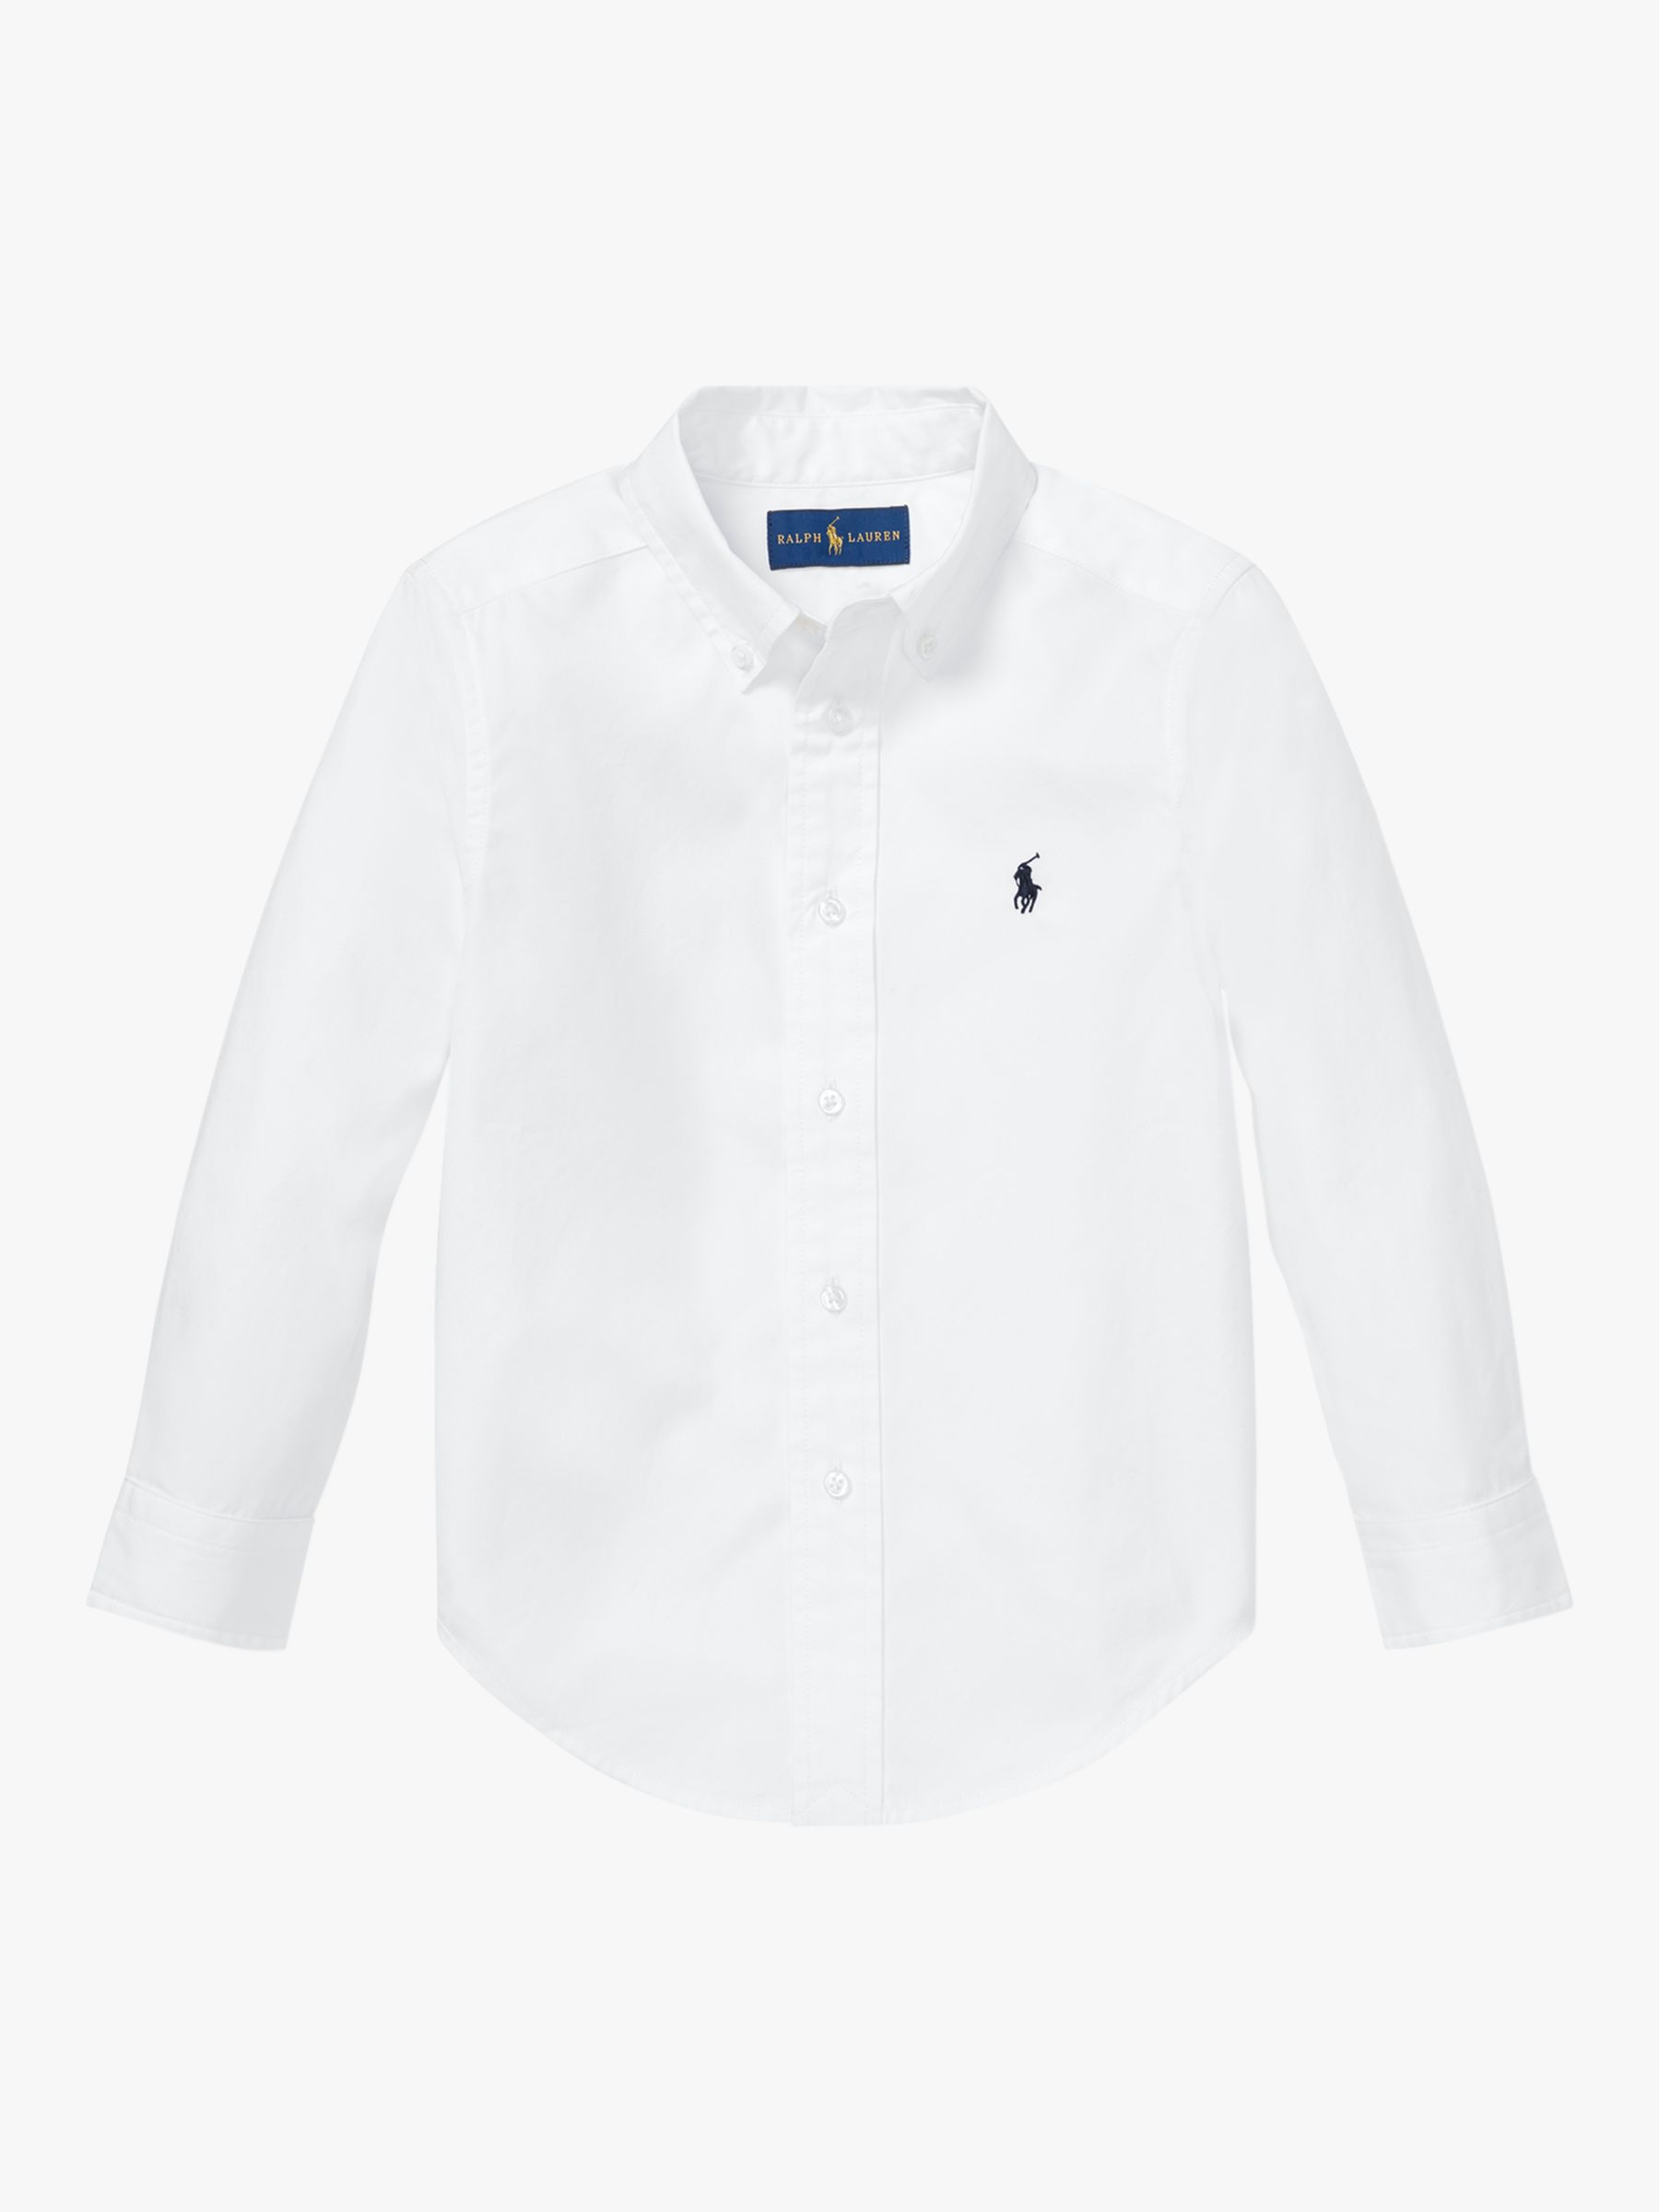 Image of Polo Ralph Lauren Boys Shirt White